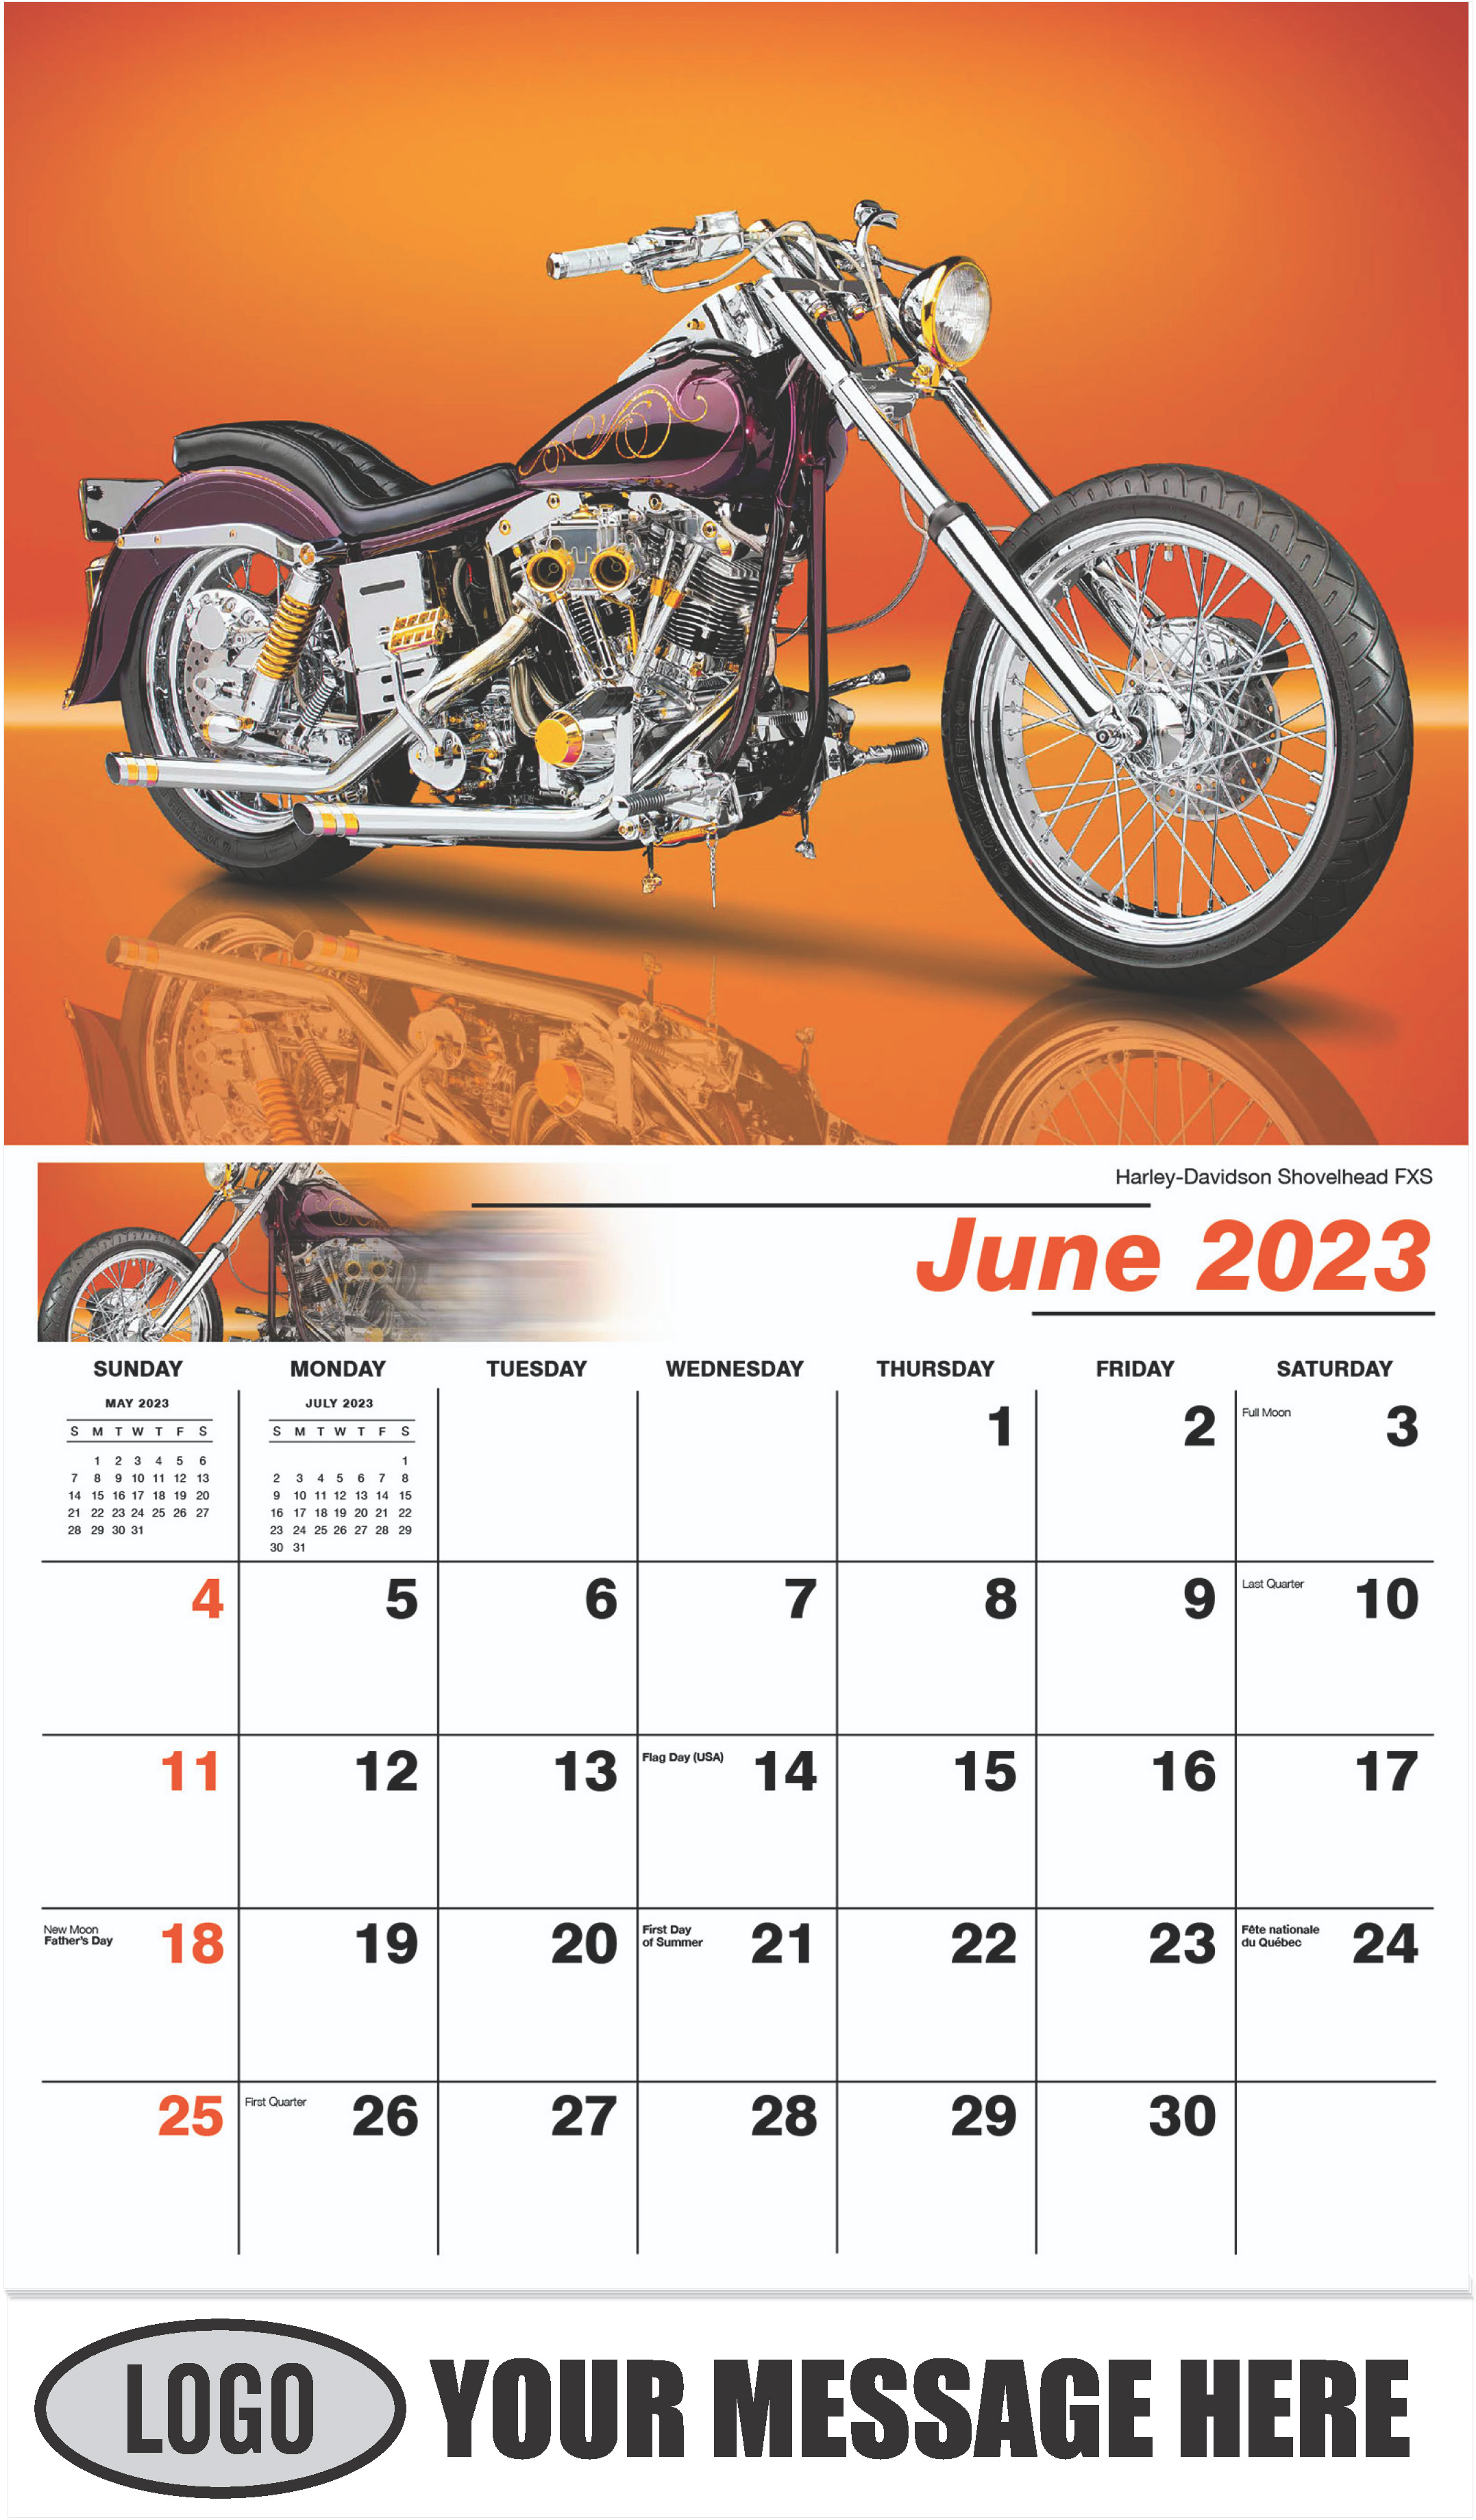 Harley-Davidson Shovelhead FXS - June - Motorcycle Mania 2023 Promotional Calendar